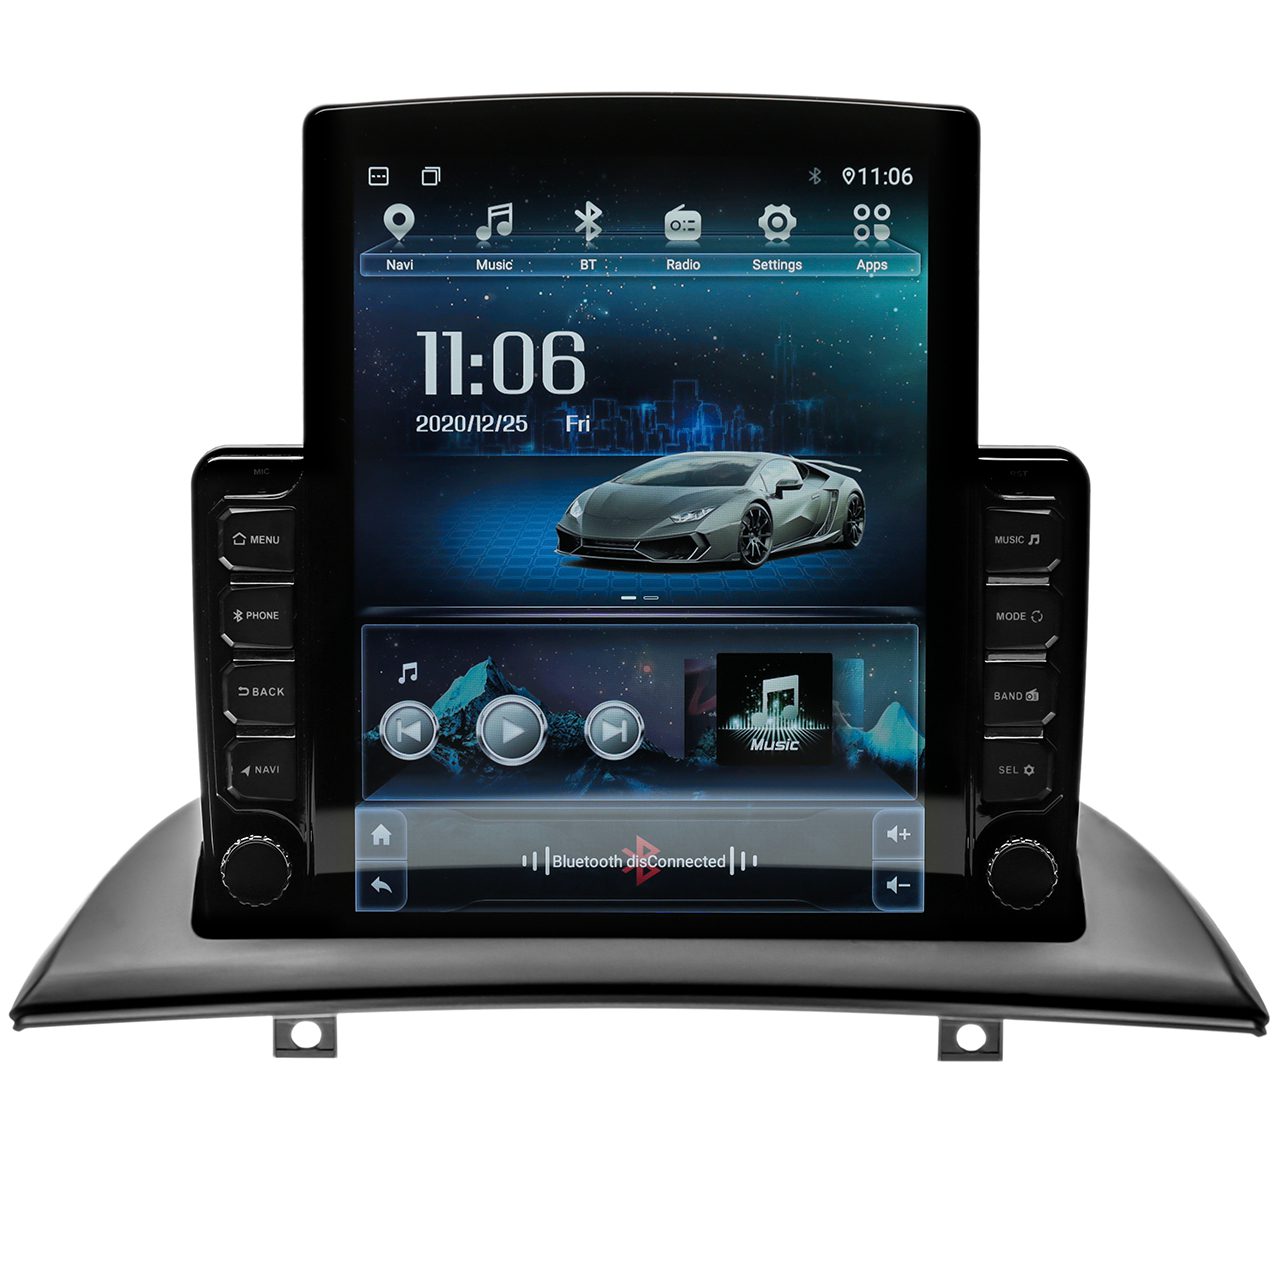 Navigatie AUTONAV Android GPS Dedicata BMW X3 E83, Model XPERT Memorie 64GB Stocare, 4GB DDR3 RAM, Butoane Si Volum Fizice, Display Vertical Stil Tesla 10